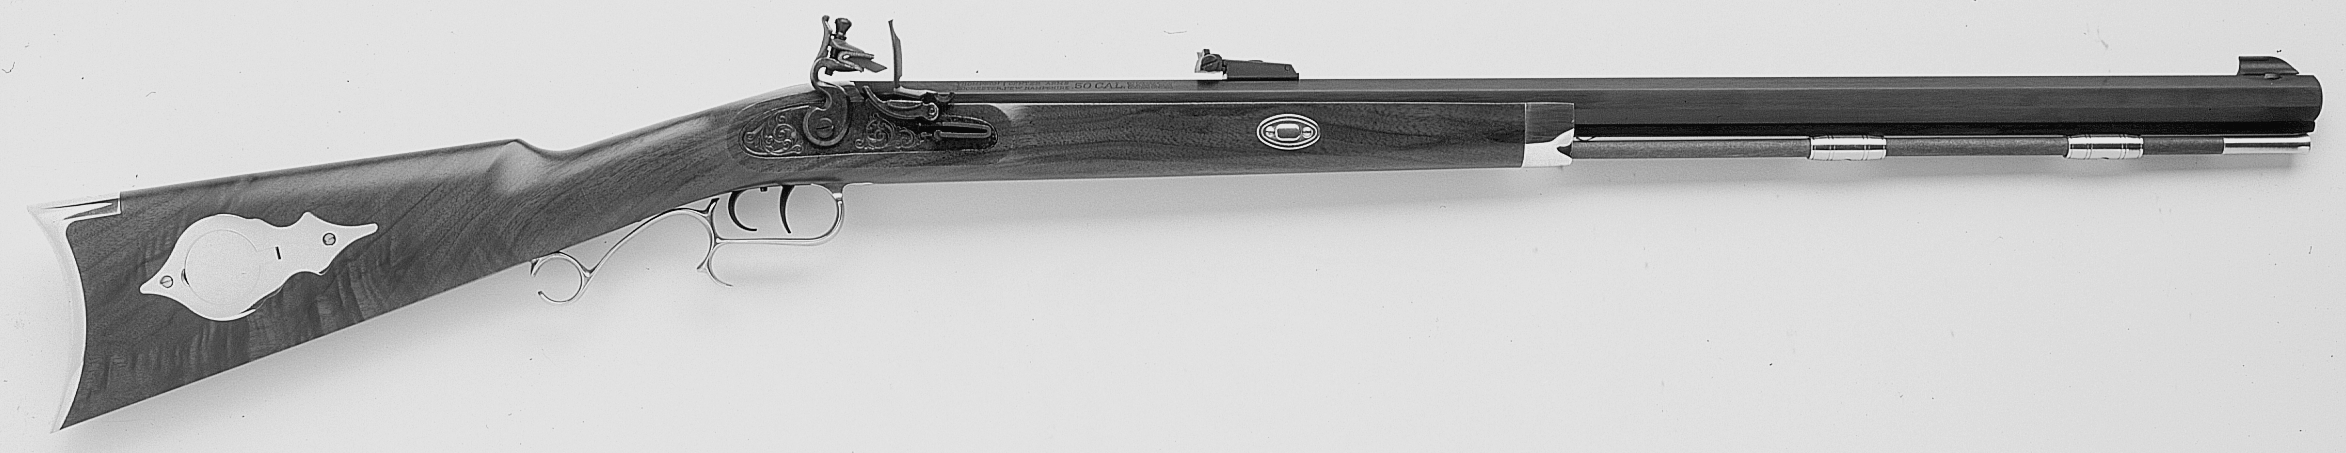 Hawken Flintlock Rifle